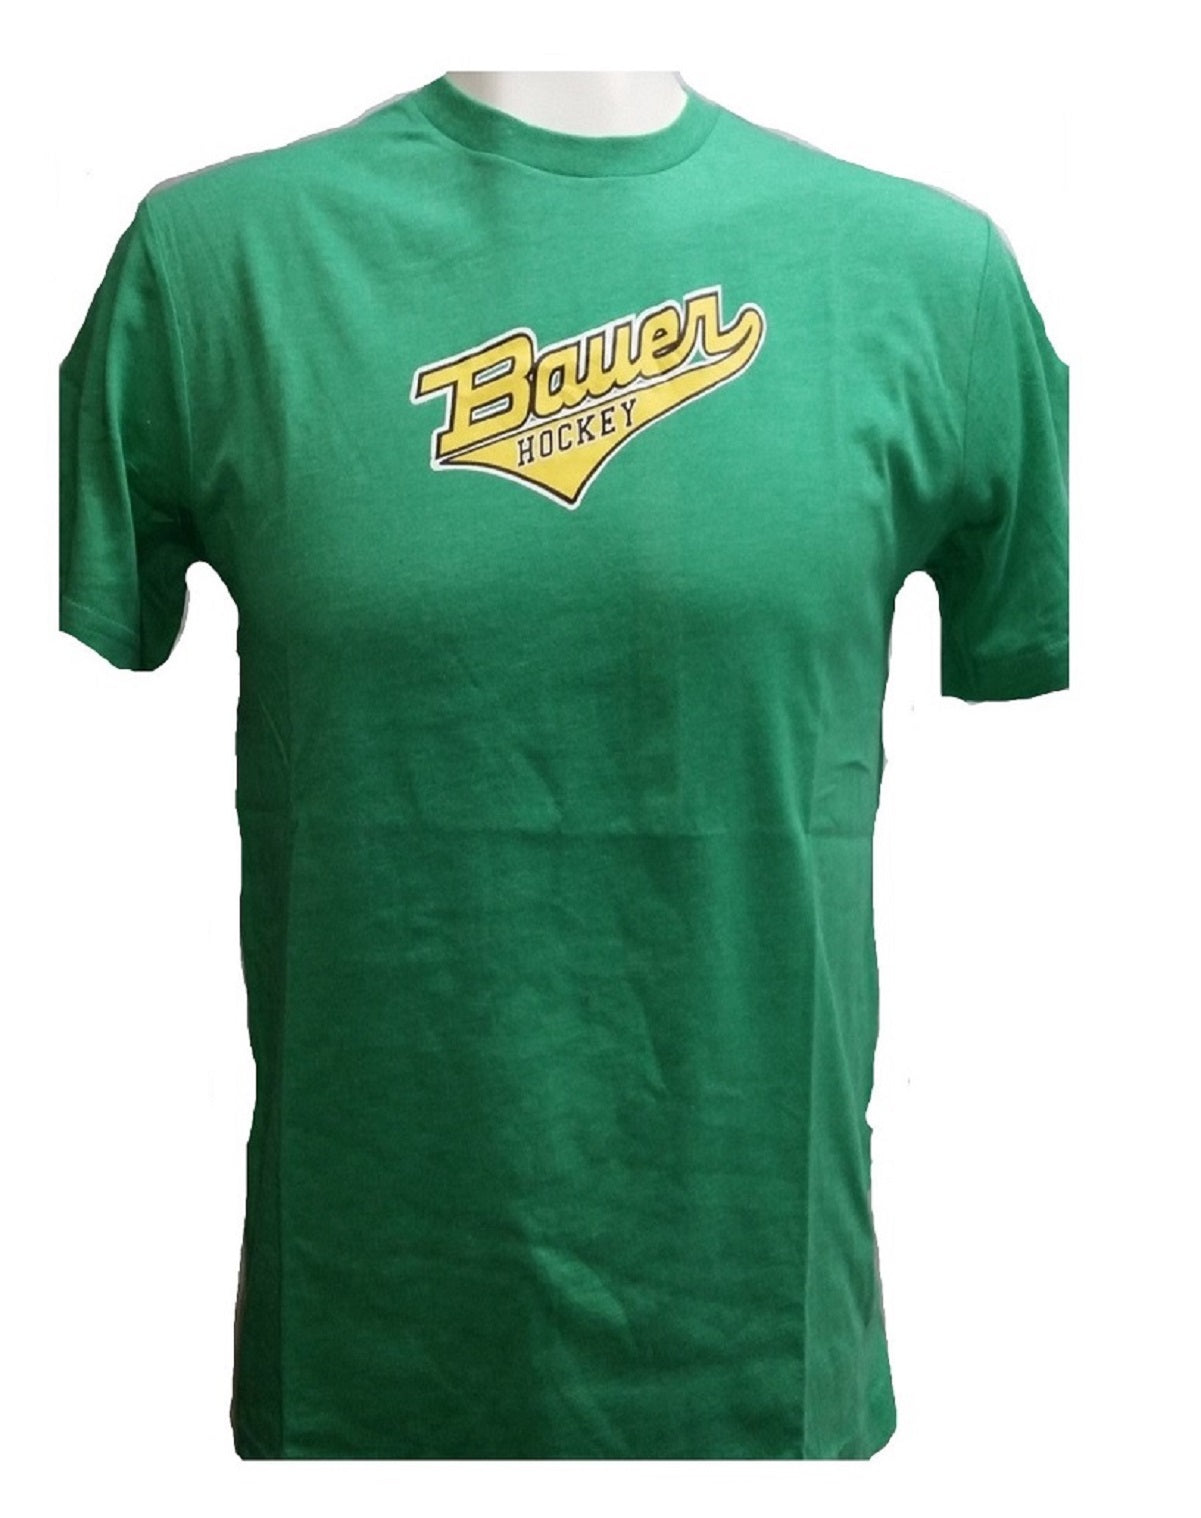 Bauer Hockey Short Sleeve Varsity Youth Green T-Shirt, Large